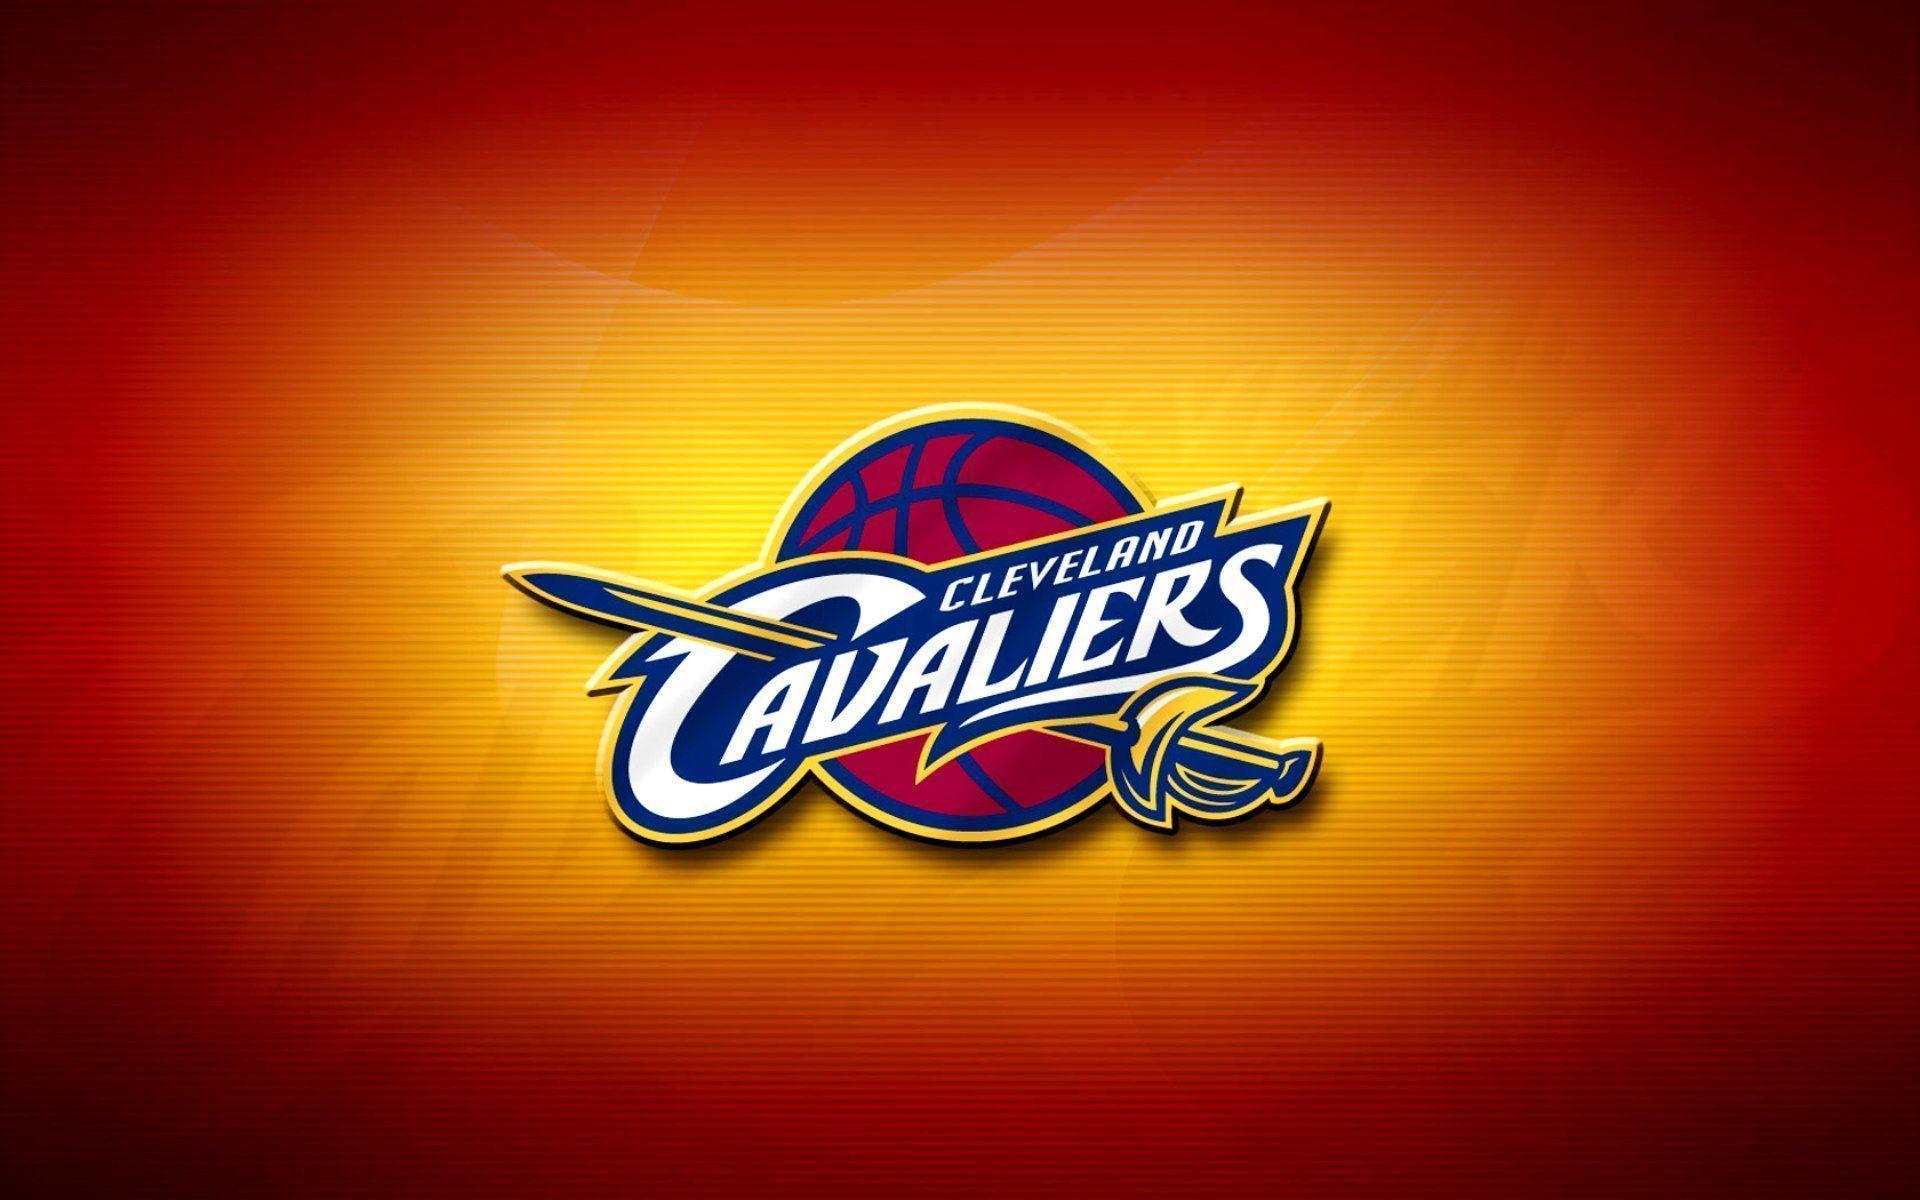 NBA Team Logos Wallpapers 2015 - Wallpaper Cave